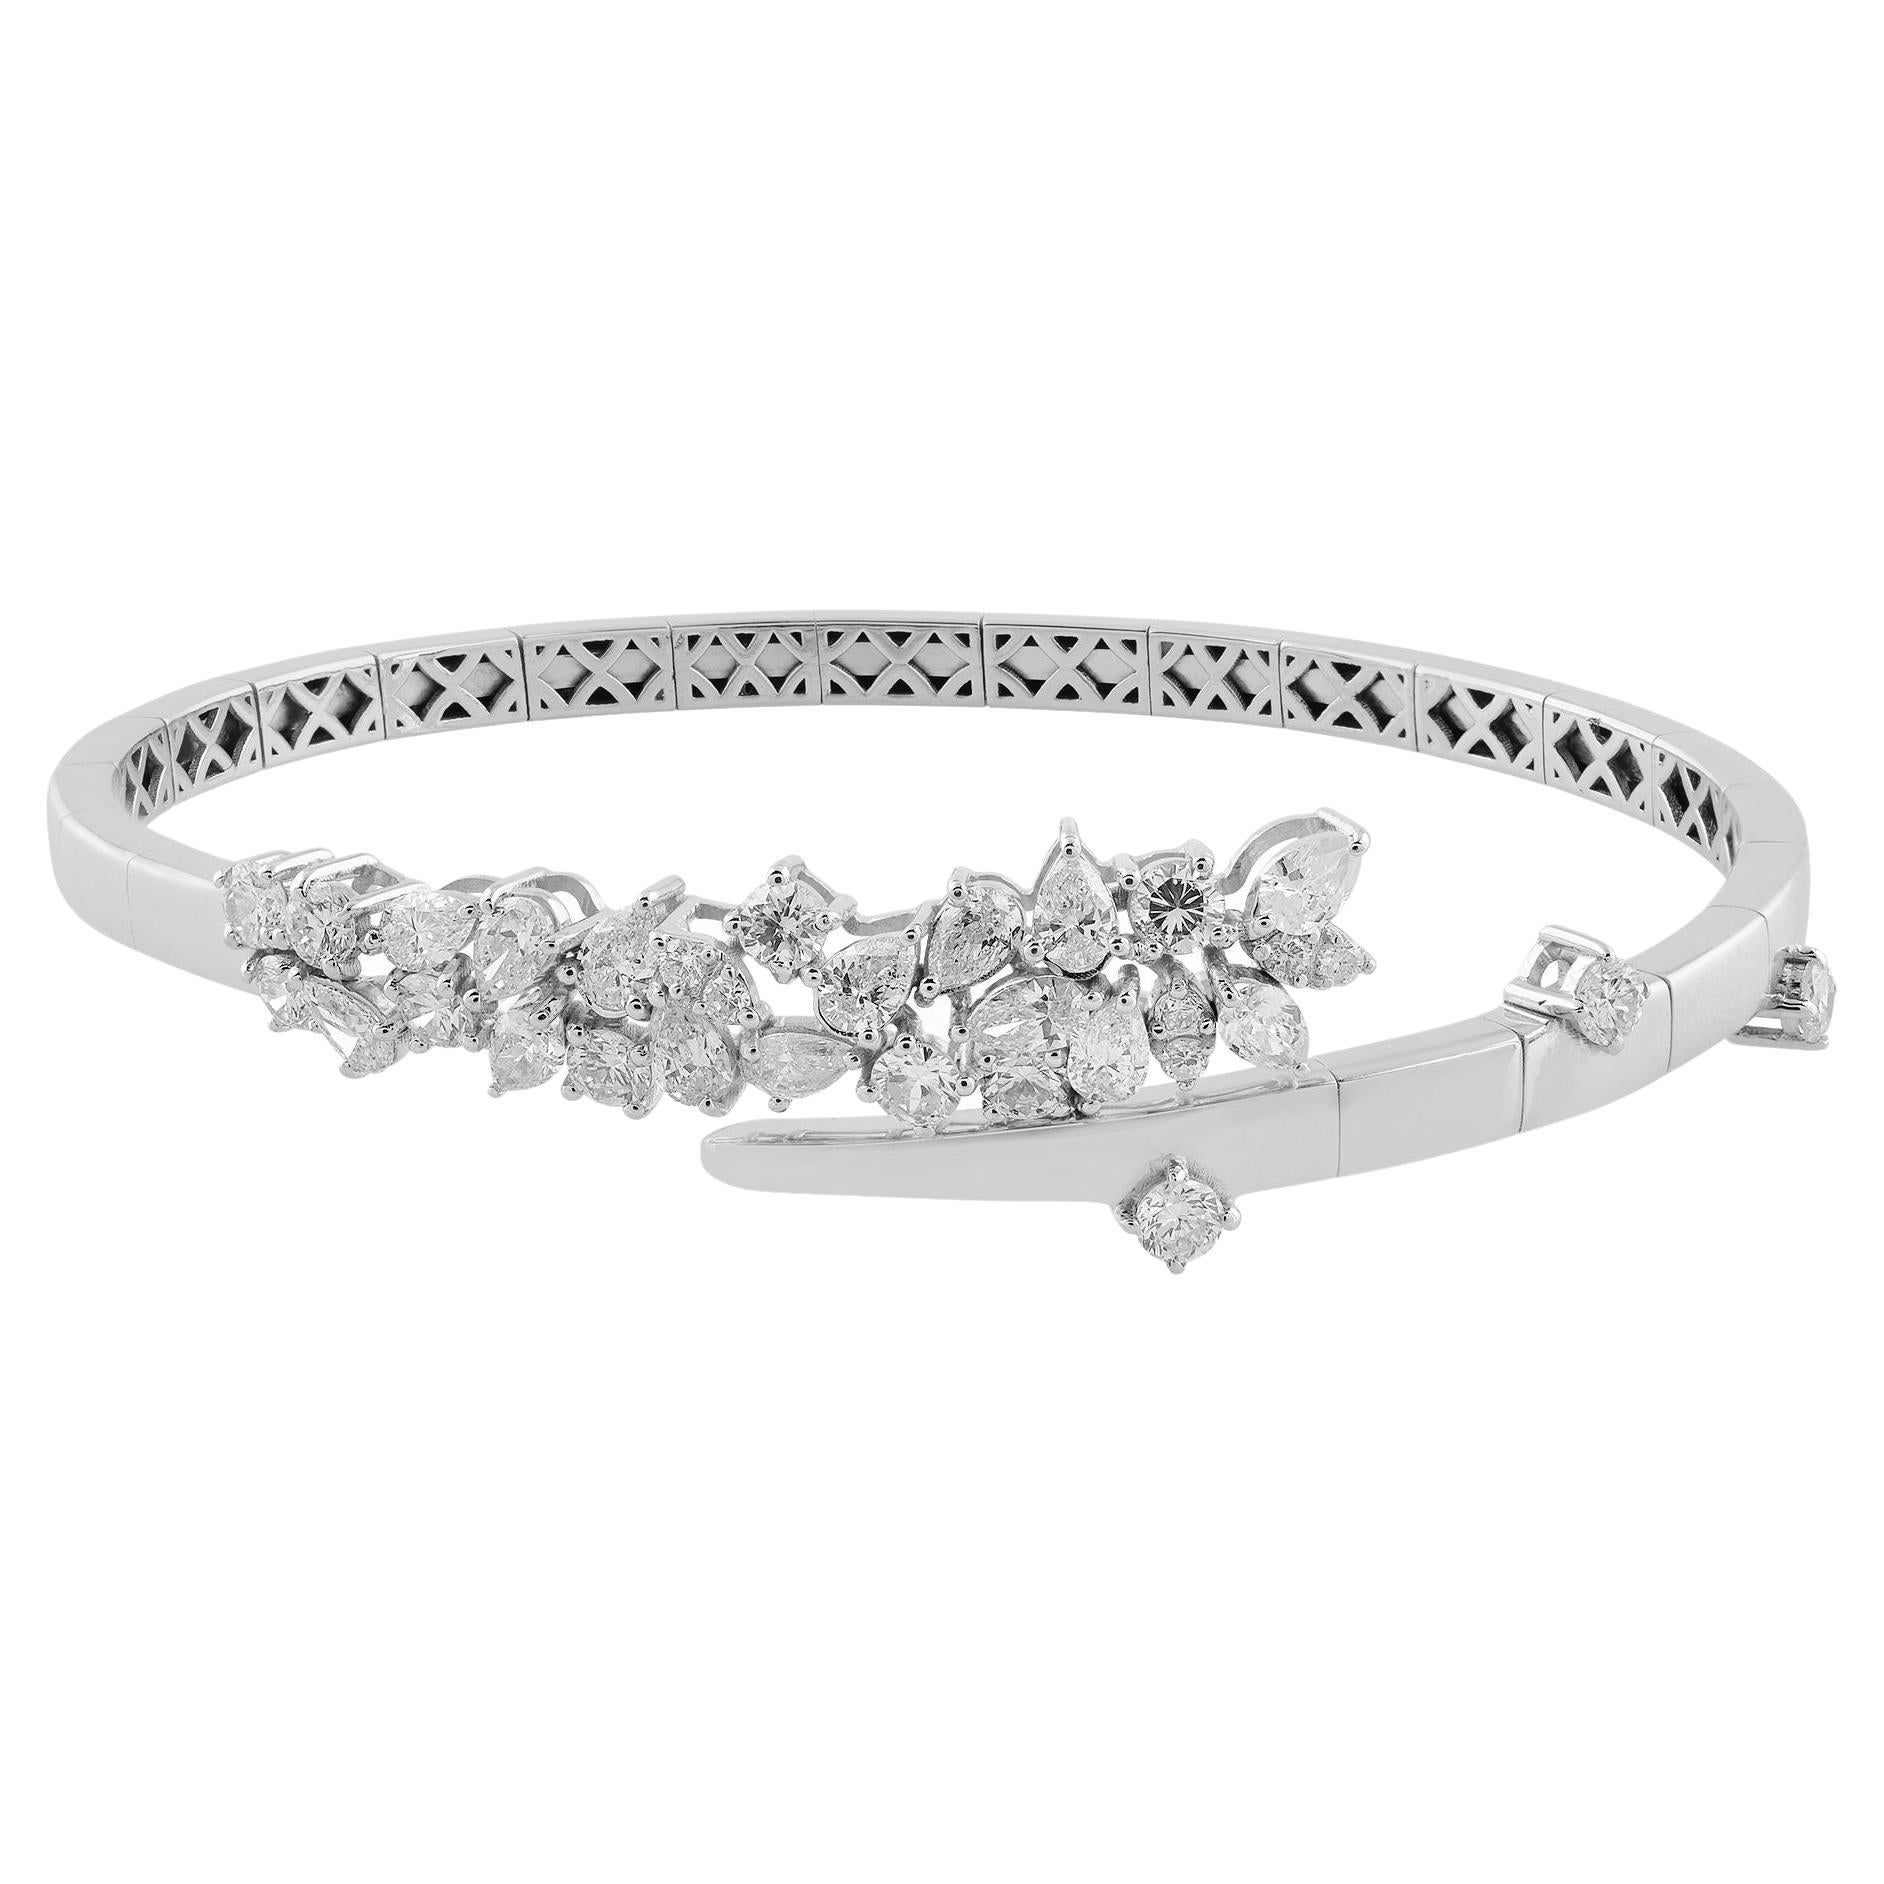 2.40 Carat SI Clarity HI Color Pear Diamond Wrap Bangle Bracelet en or blanc 18k